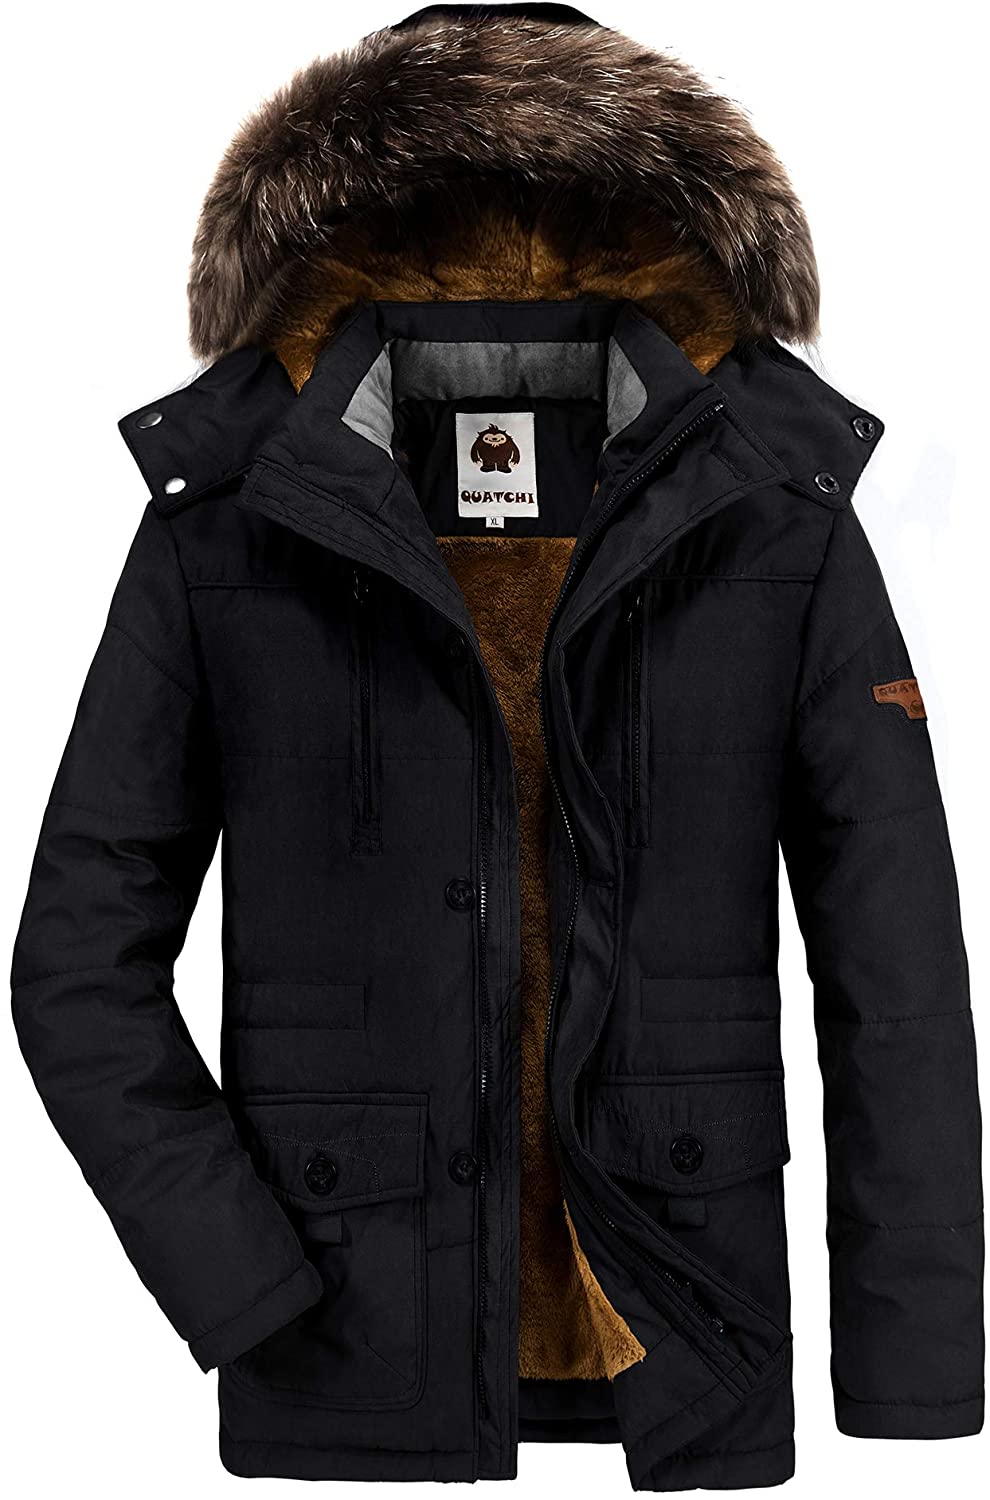 HAINES Parka Jacket Mens Coats with Fur Hood